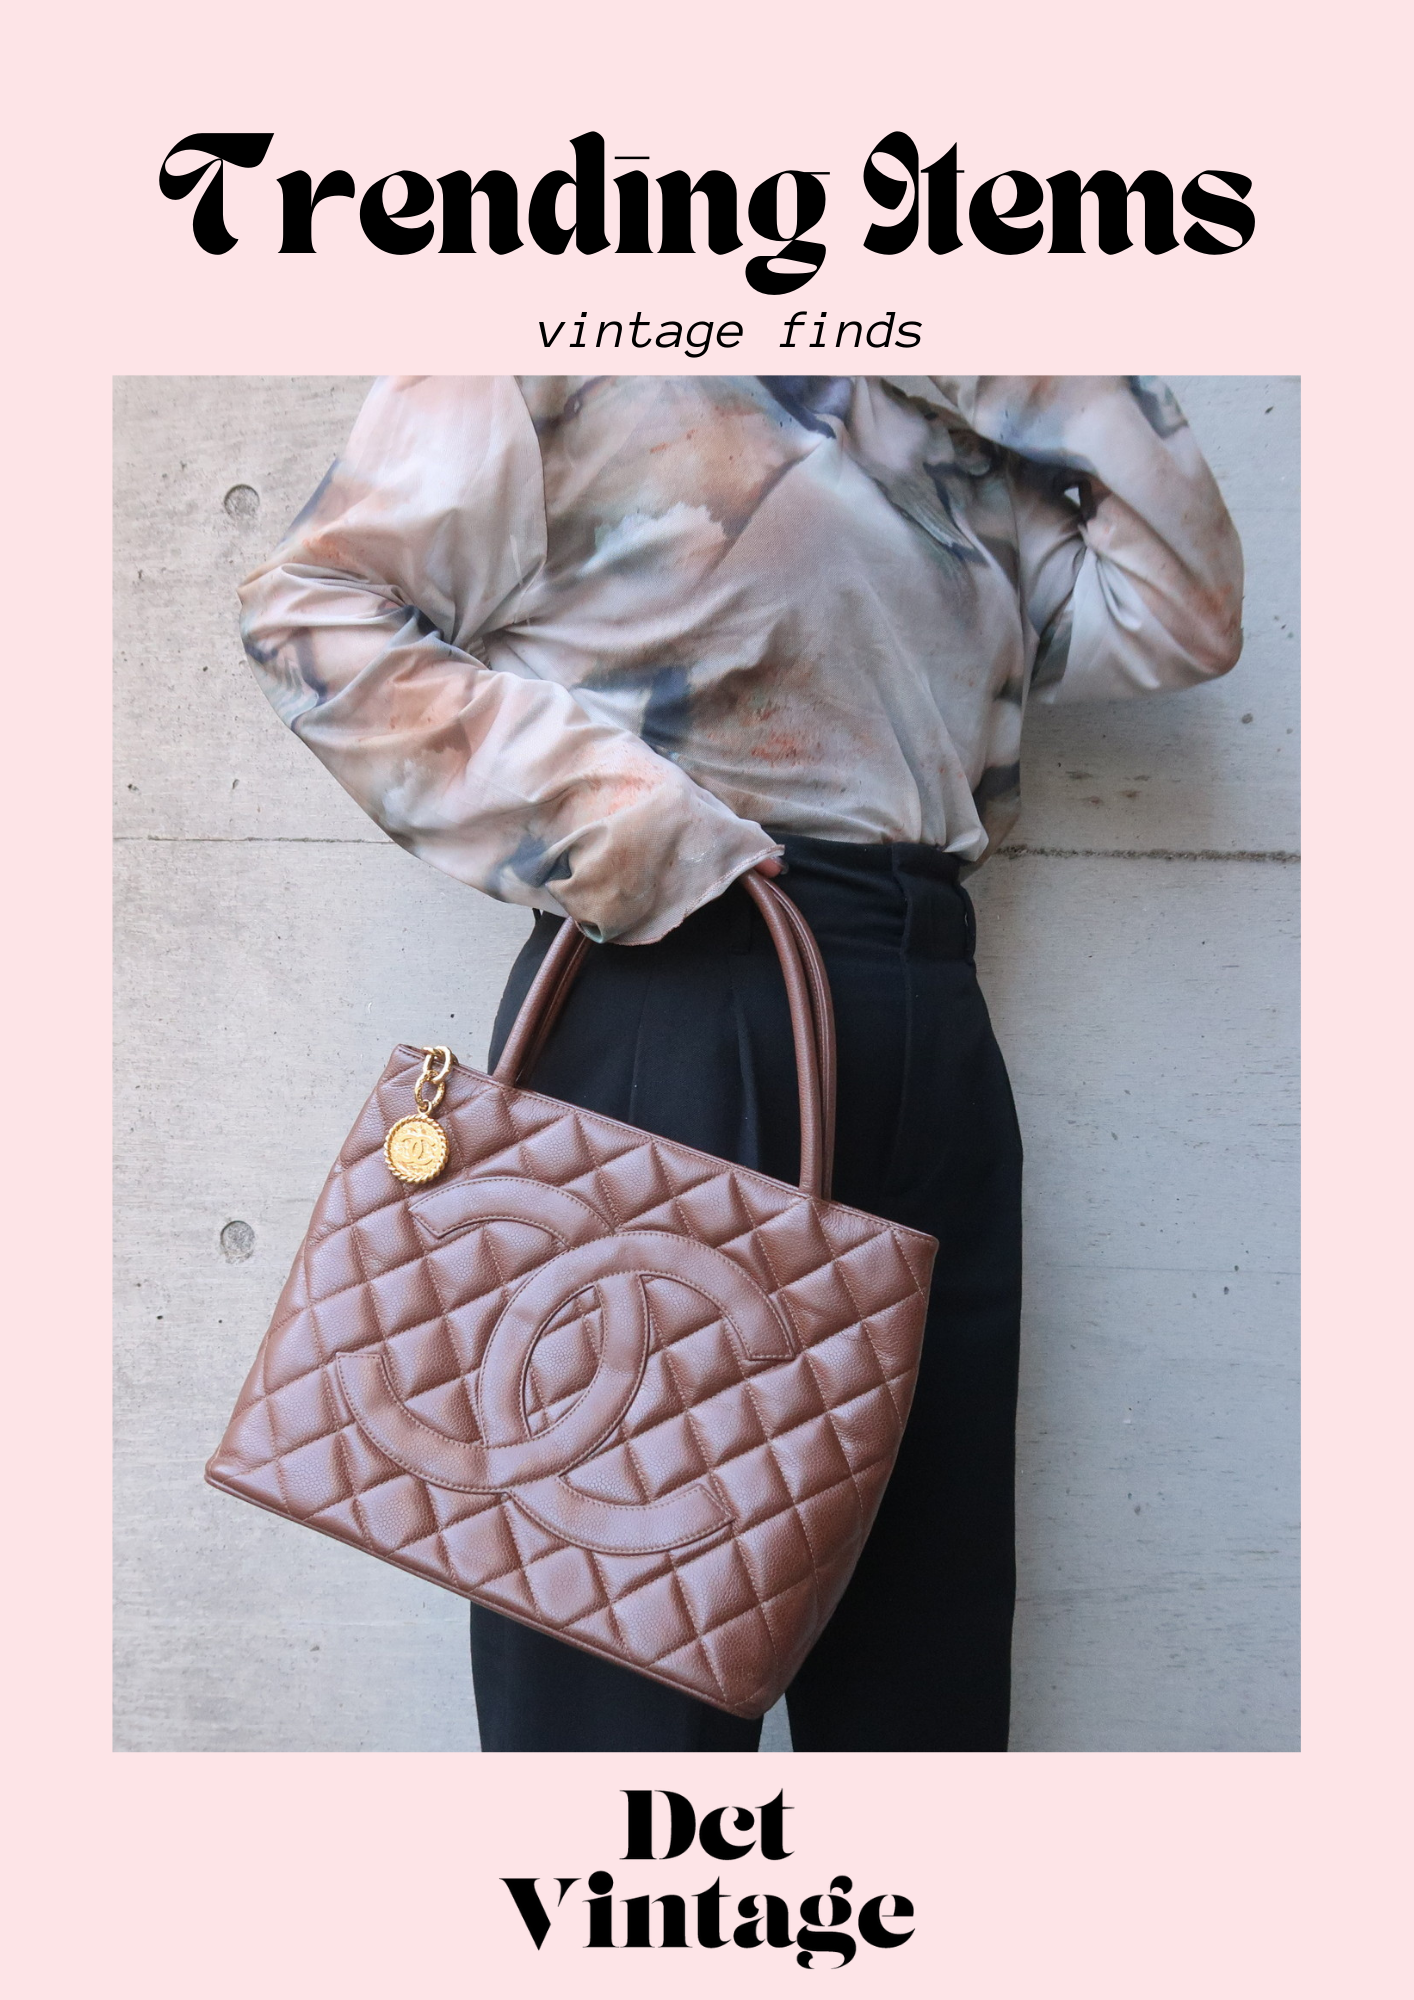 Buy Louis Vuitton Monogram Strap Sandals Brown/Black Ladies 34 Brown/Black  from Japan - Buy authentic Plus exclusive items from Japan